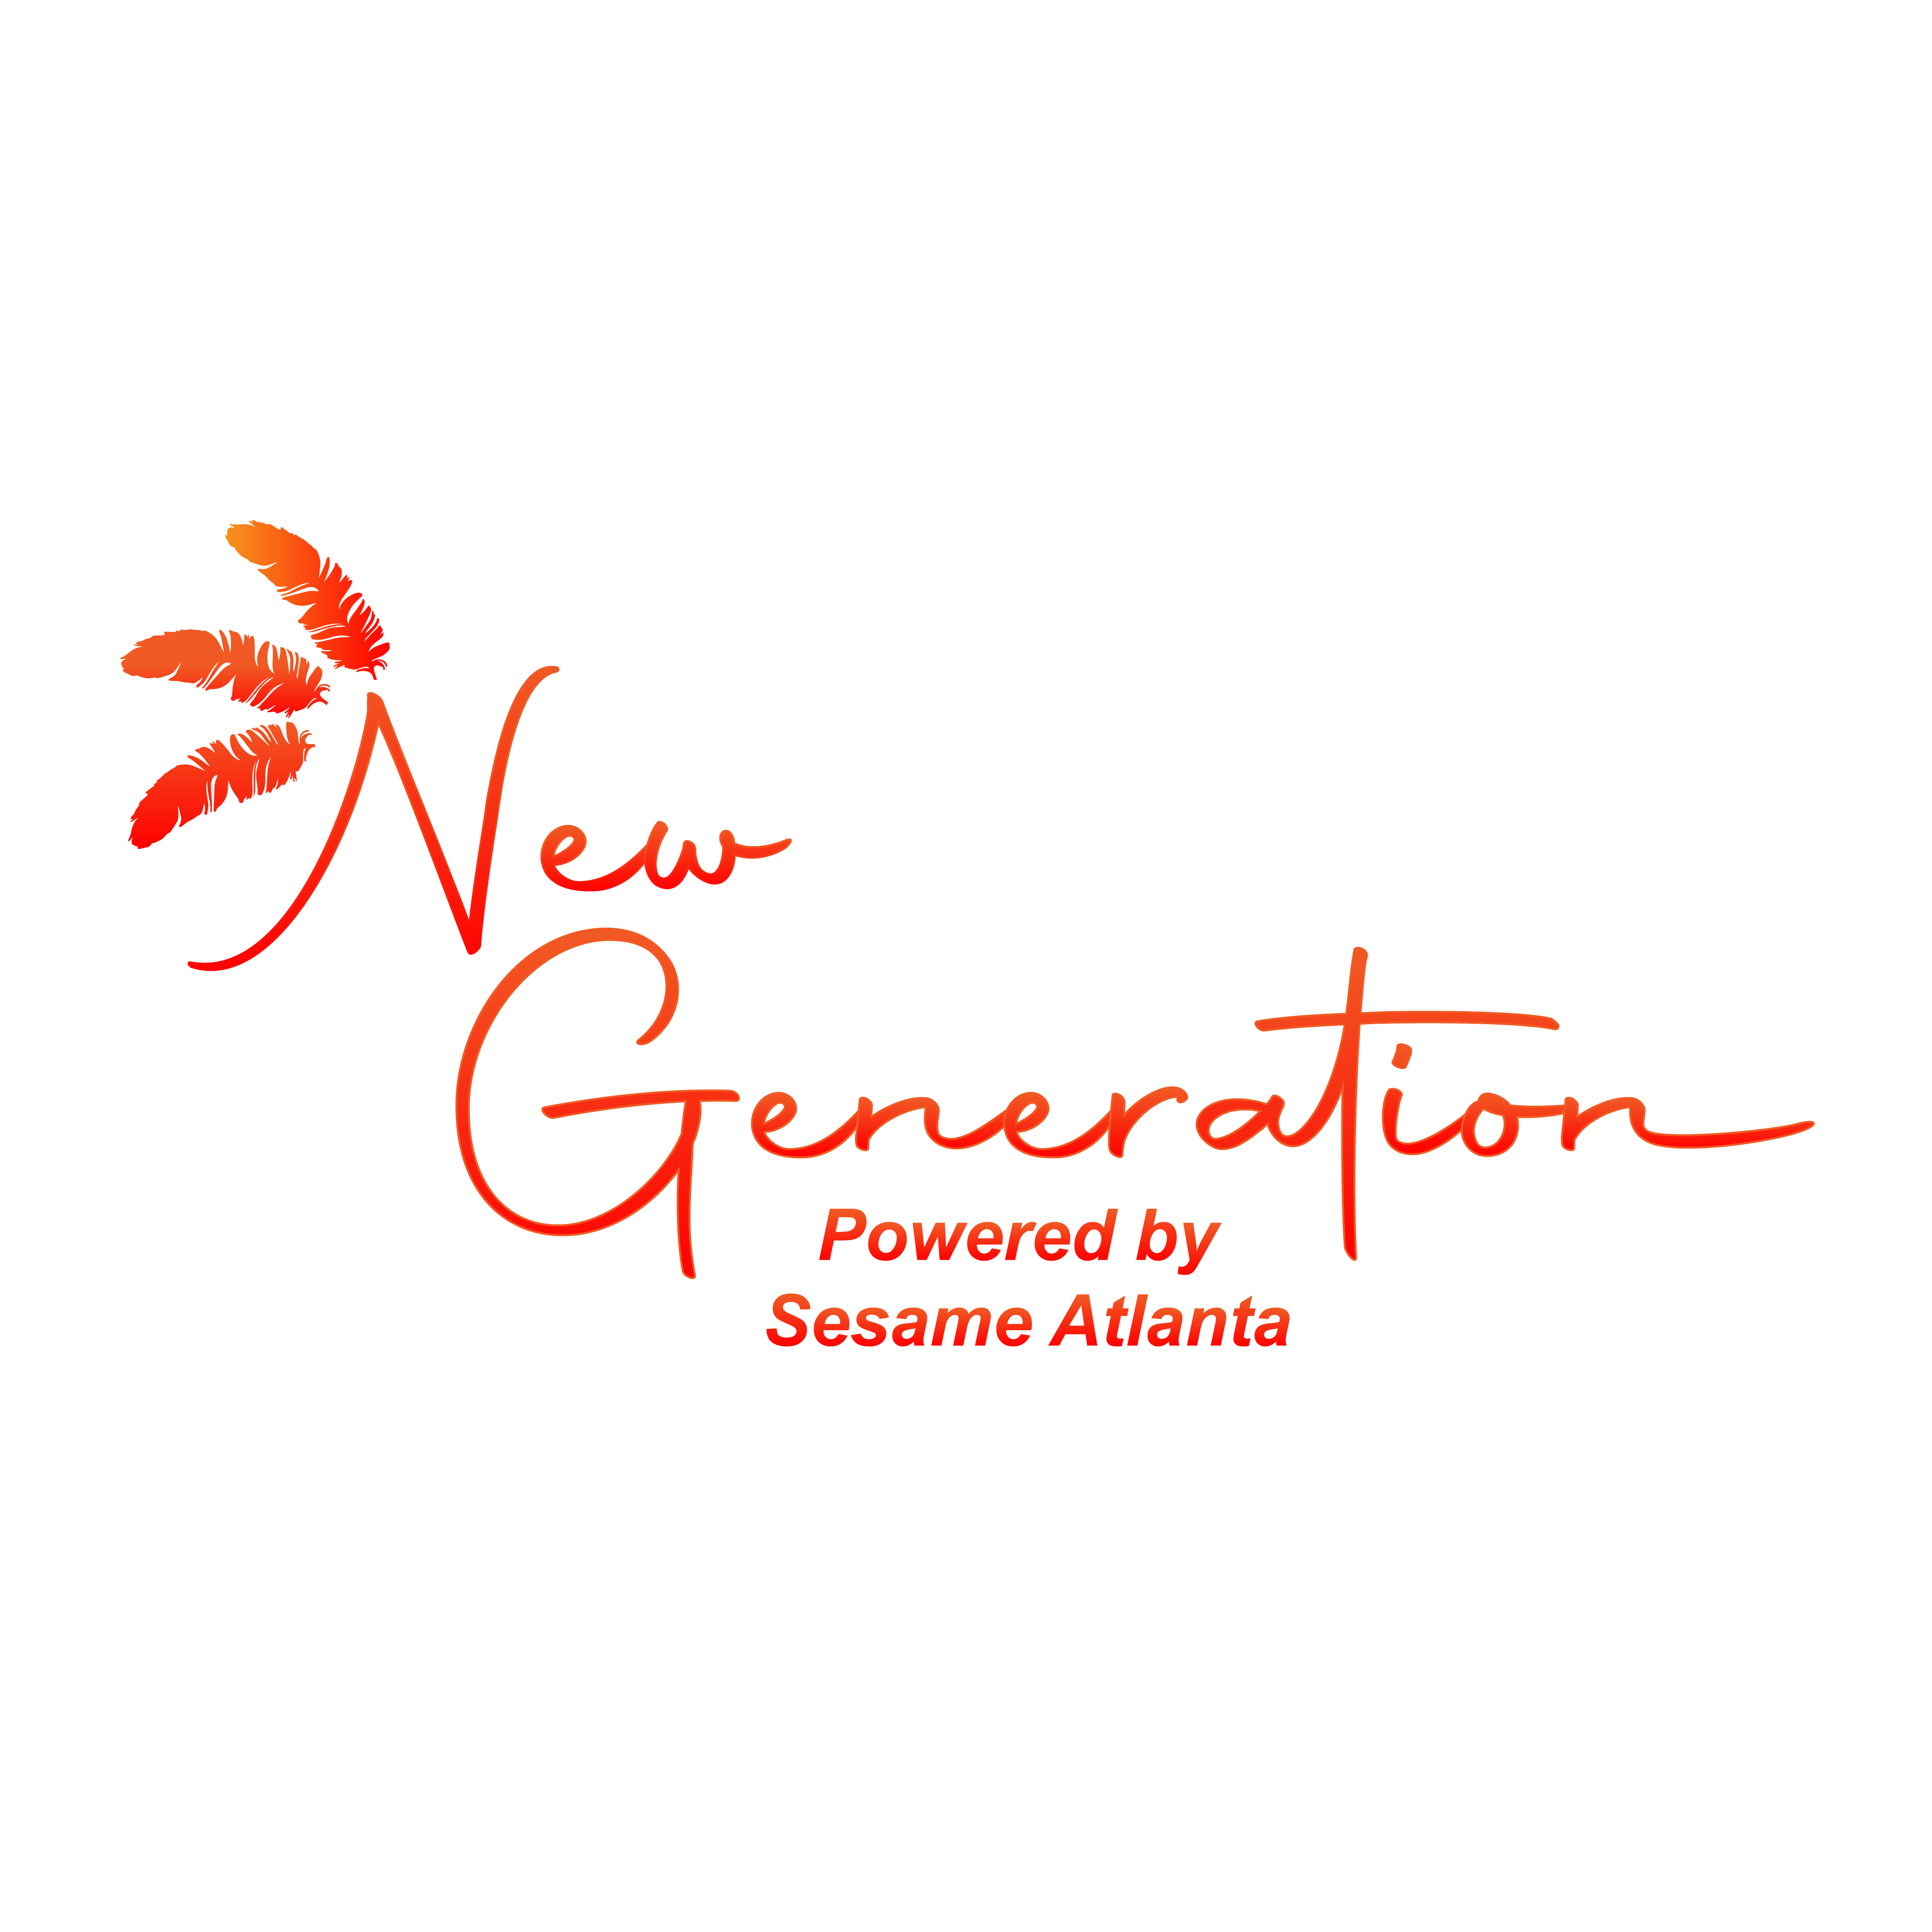 NEW GENERATION